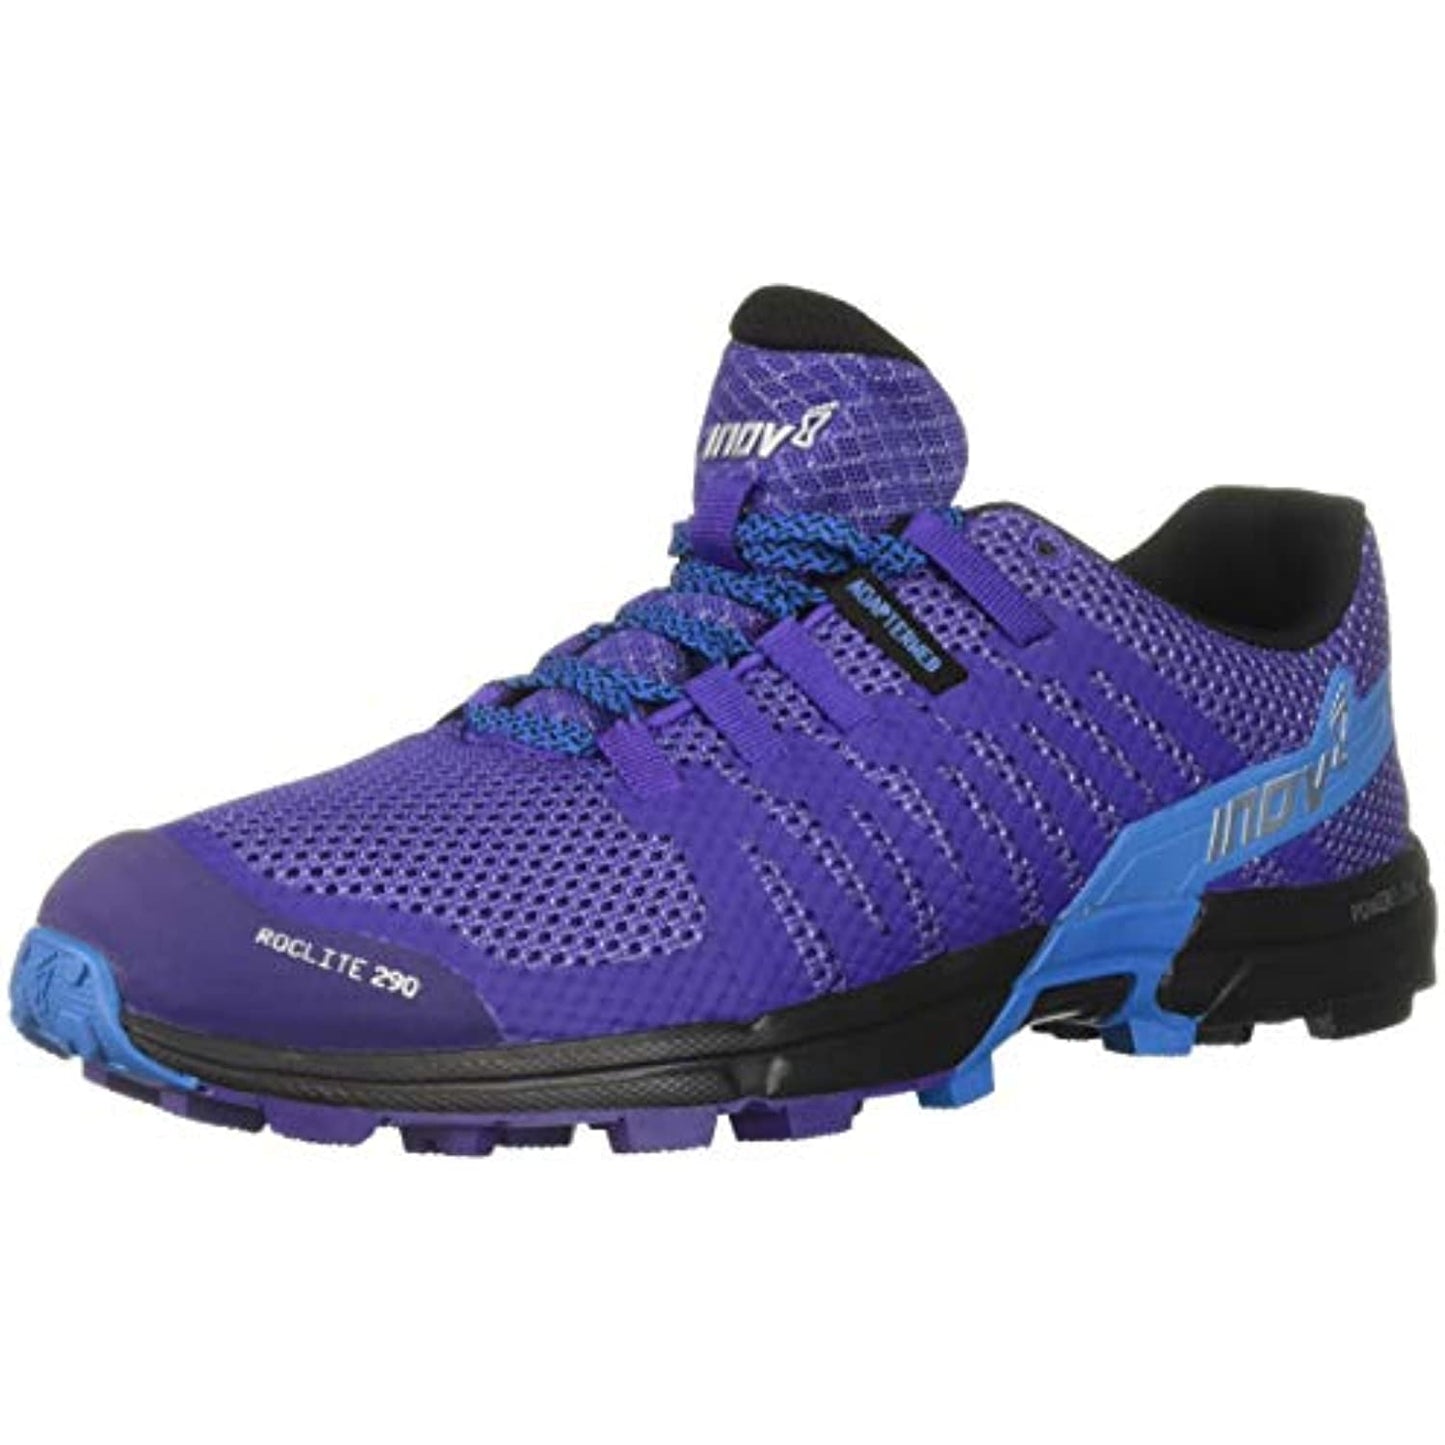 Inov-8 Women's Roclite 290 (W) Trail Running Shoe, Purple/Blue, 6 B US